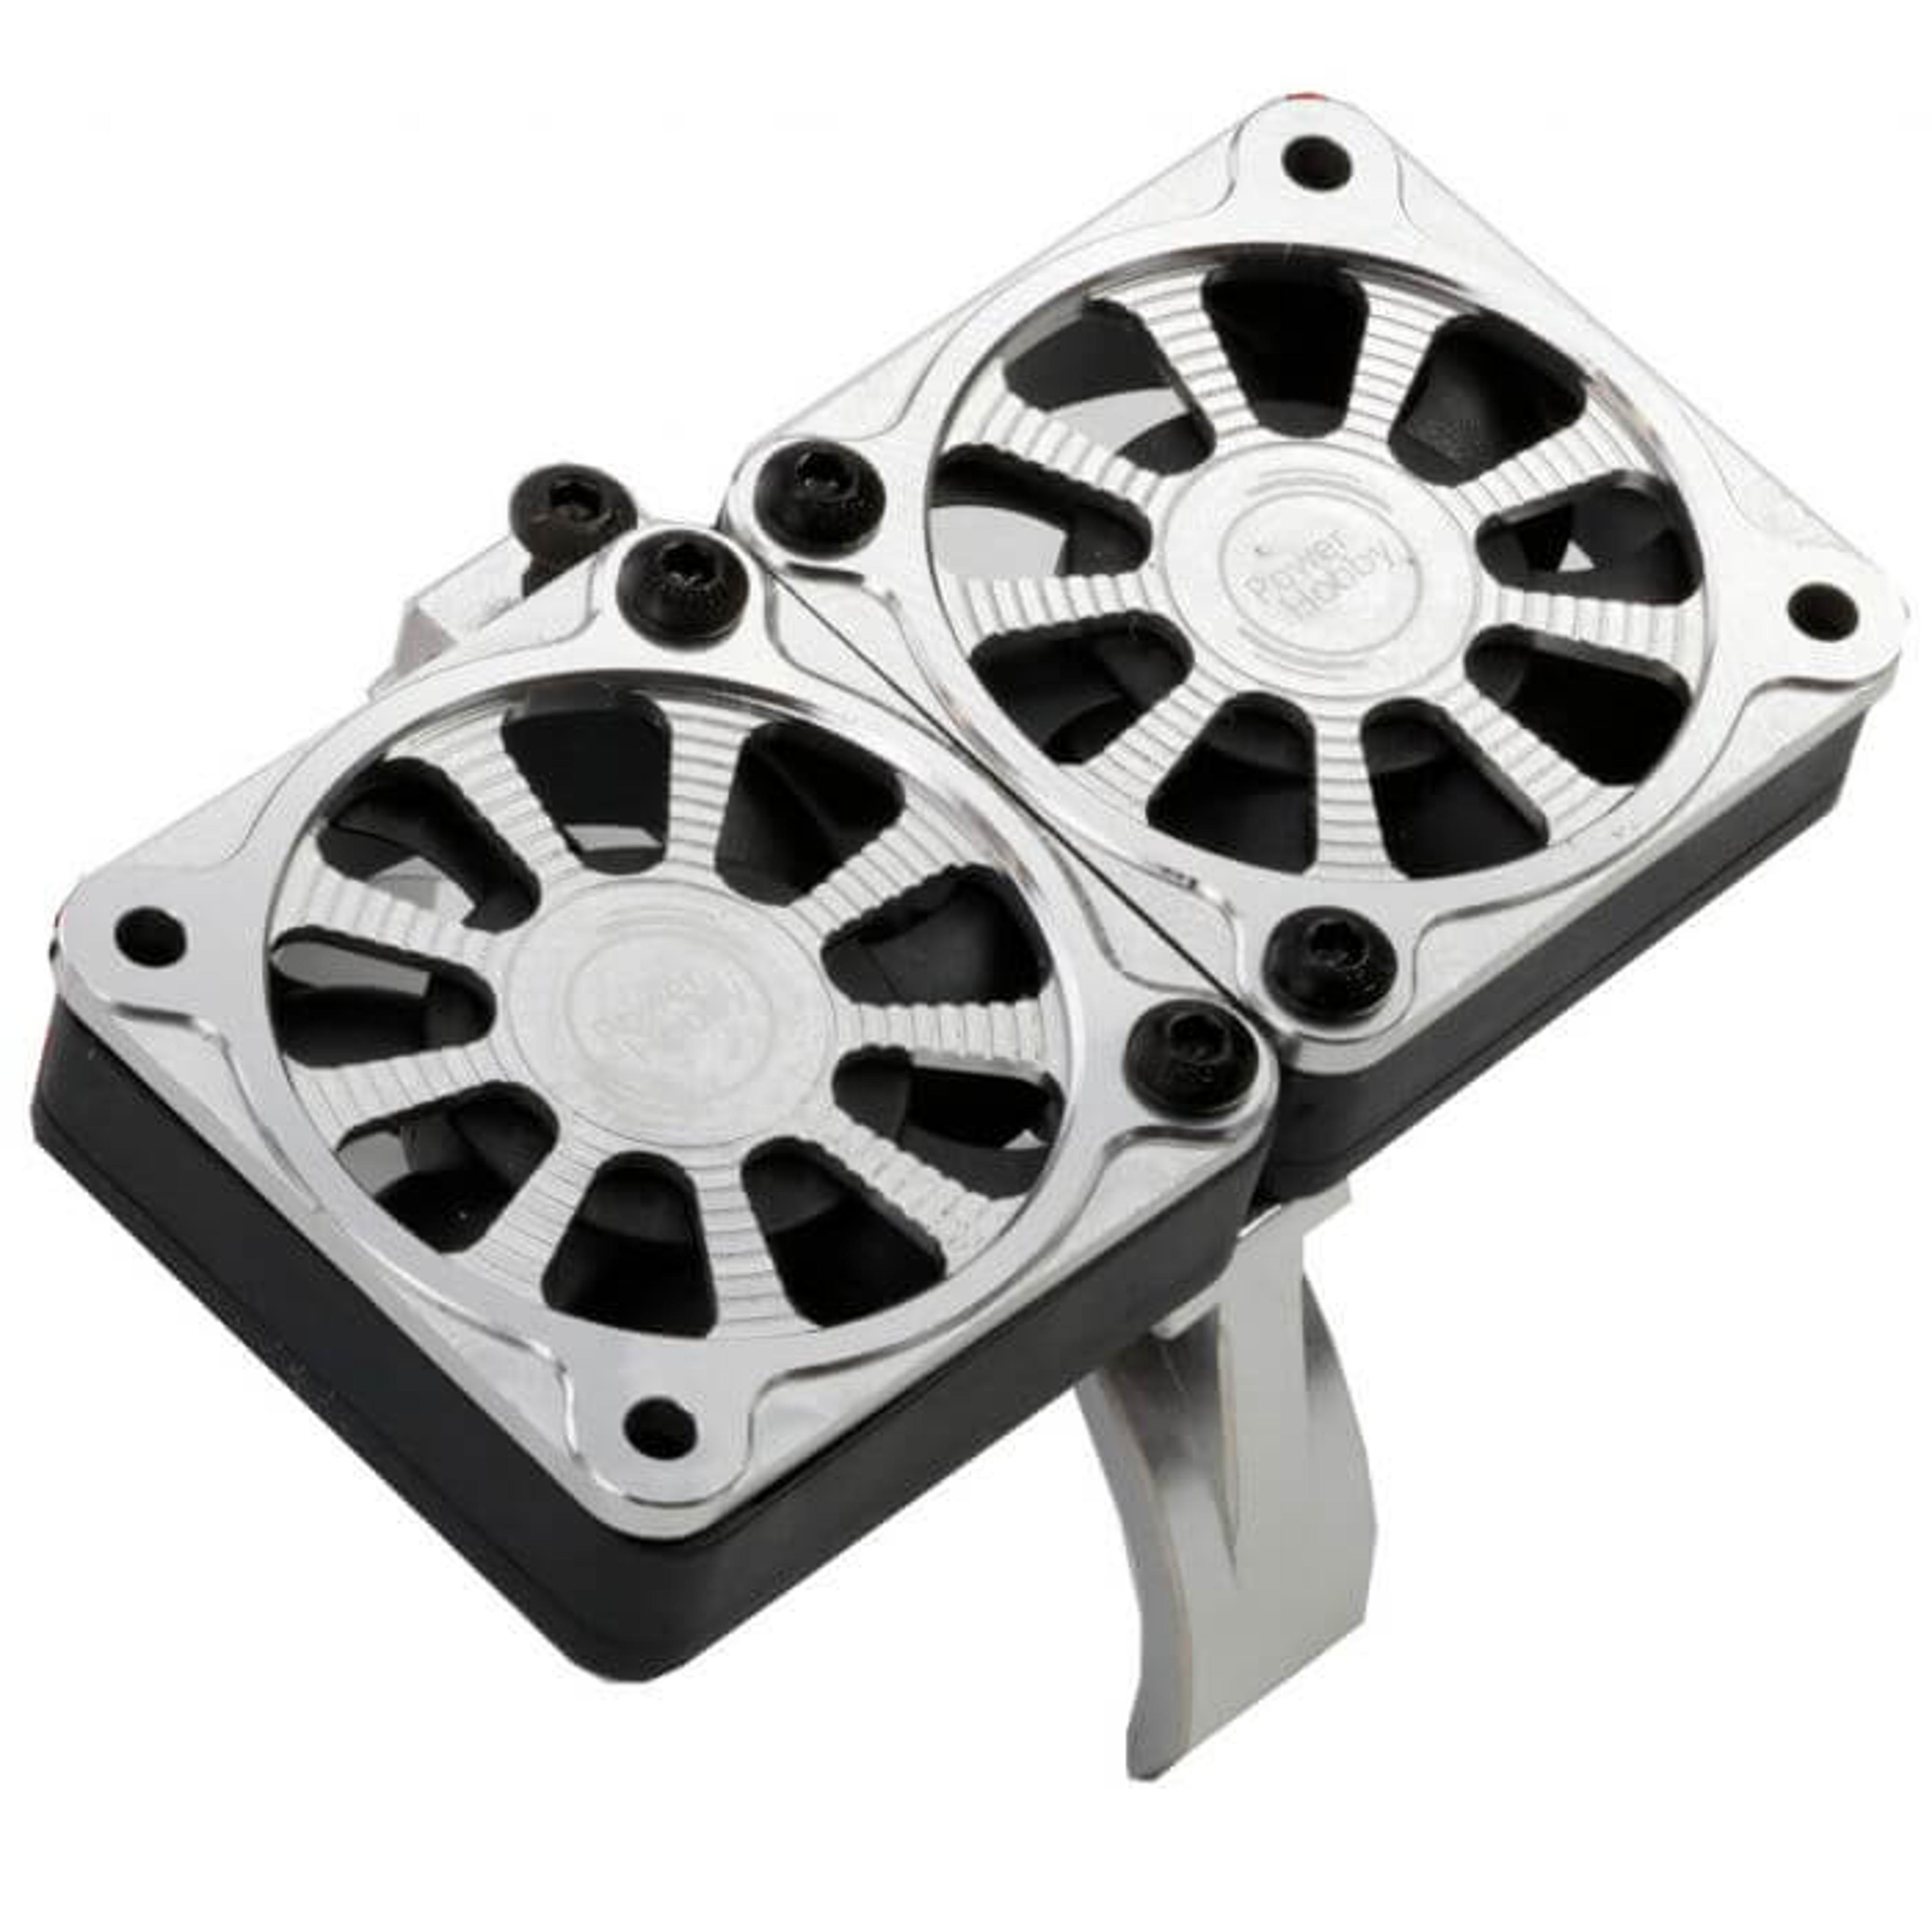 1/8 Aluminum Heatsink Dual High Speed Cooling Fans w/ Cover 40mm (Silver)